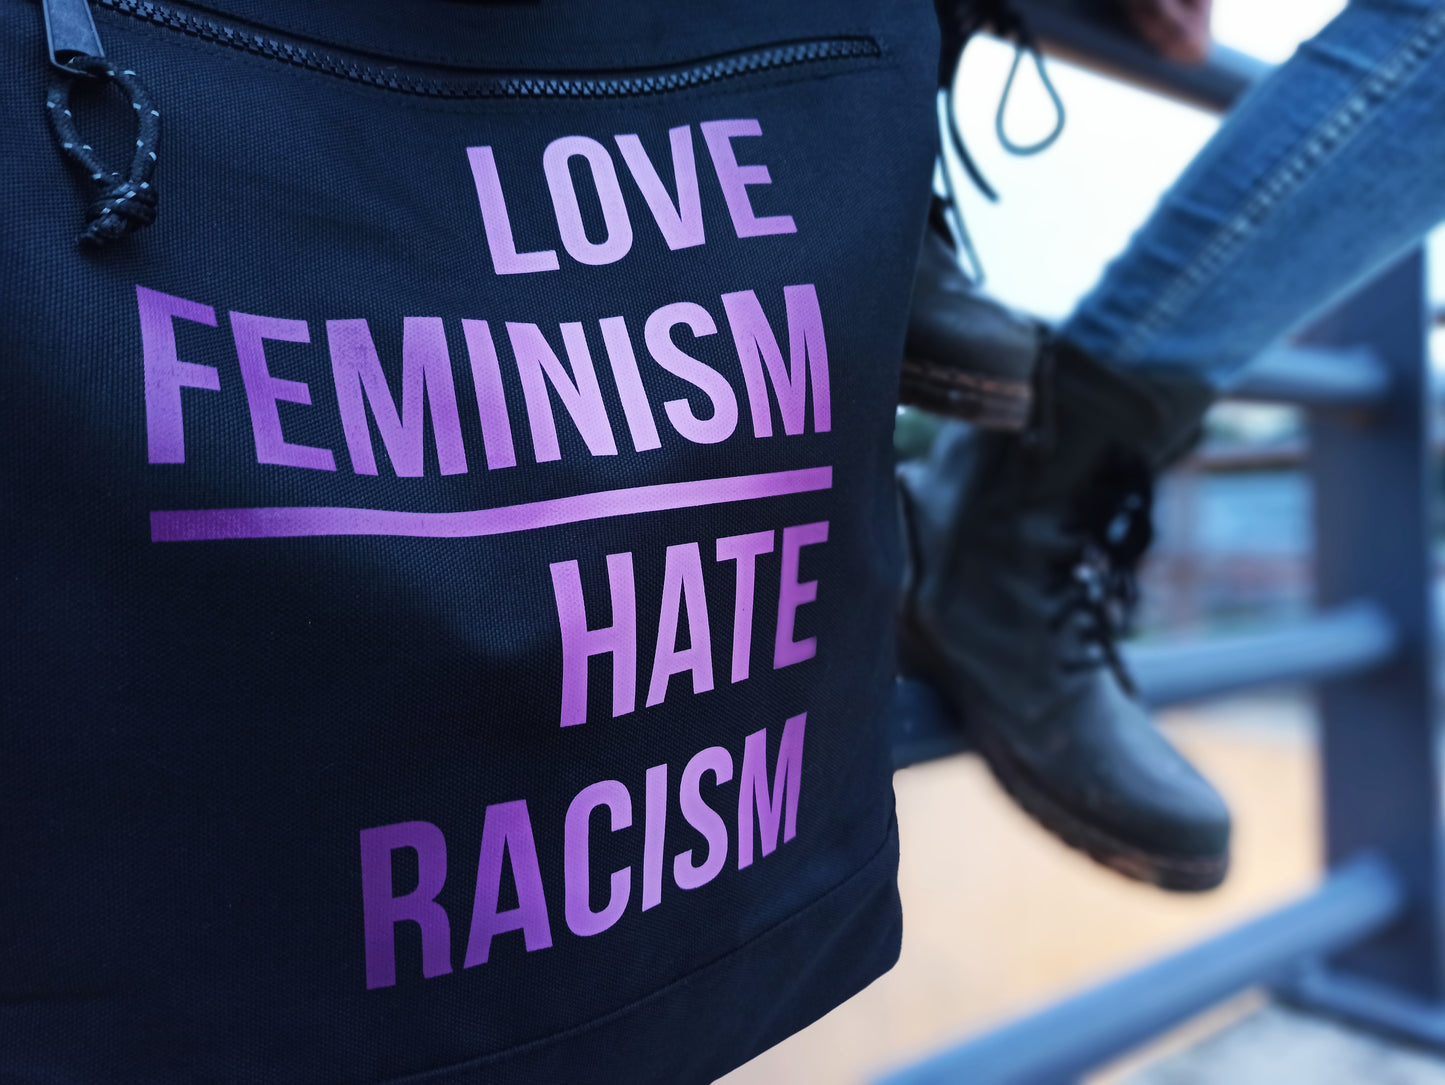 Love Feminism - Hate Racism